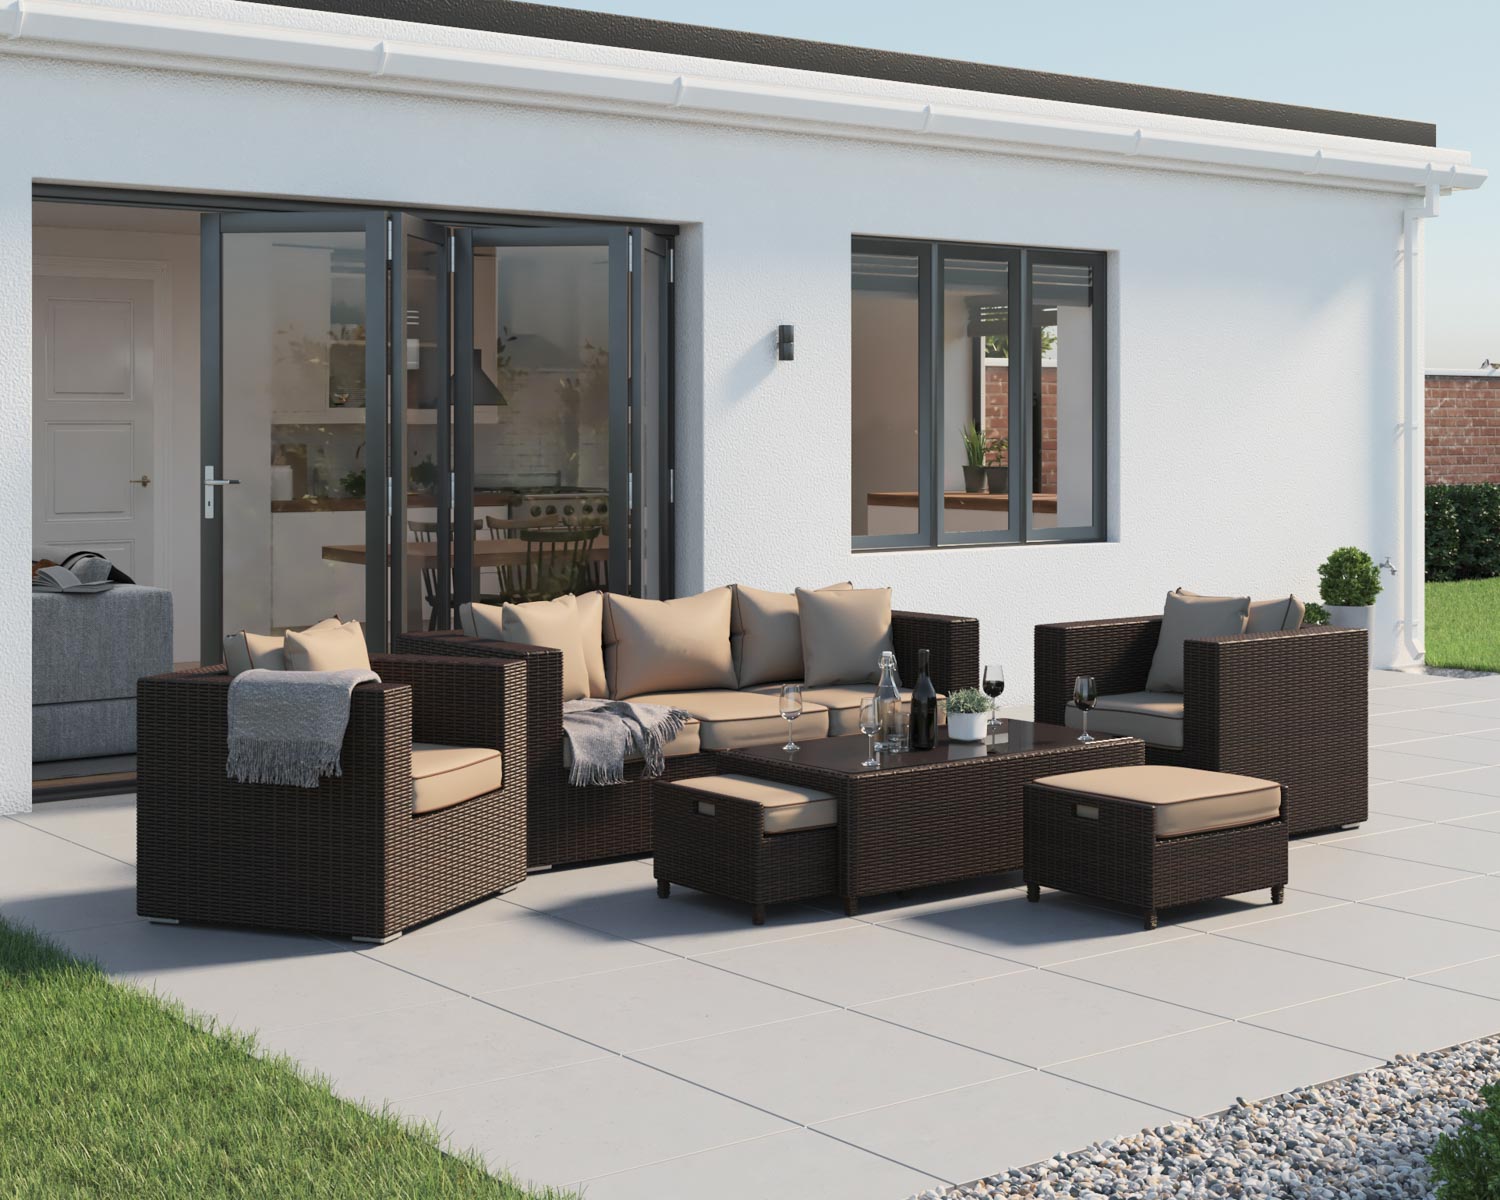 3 Seater Rattan Garden Sofa & Armchair Set in Brown - Ascot - Rattan Direct